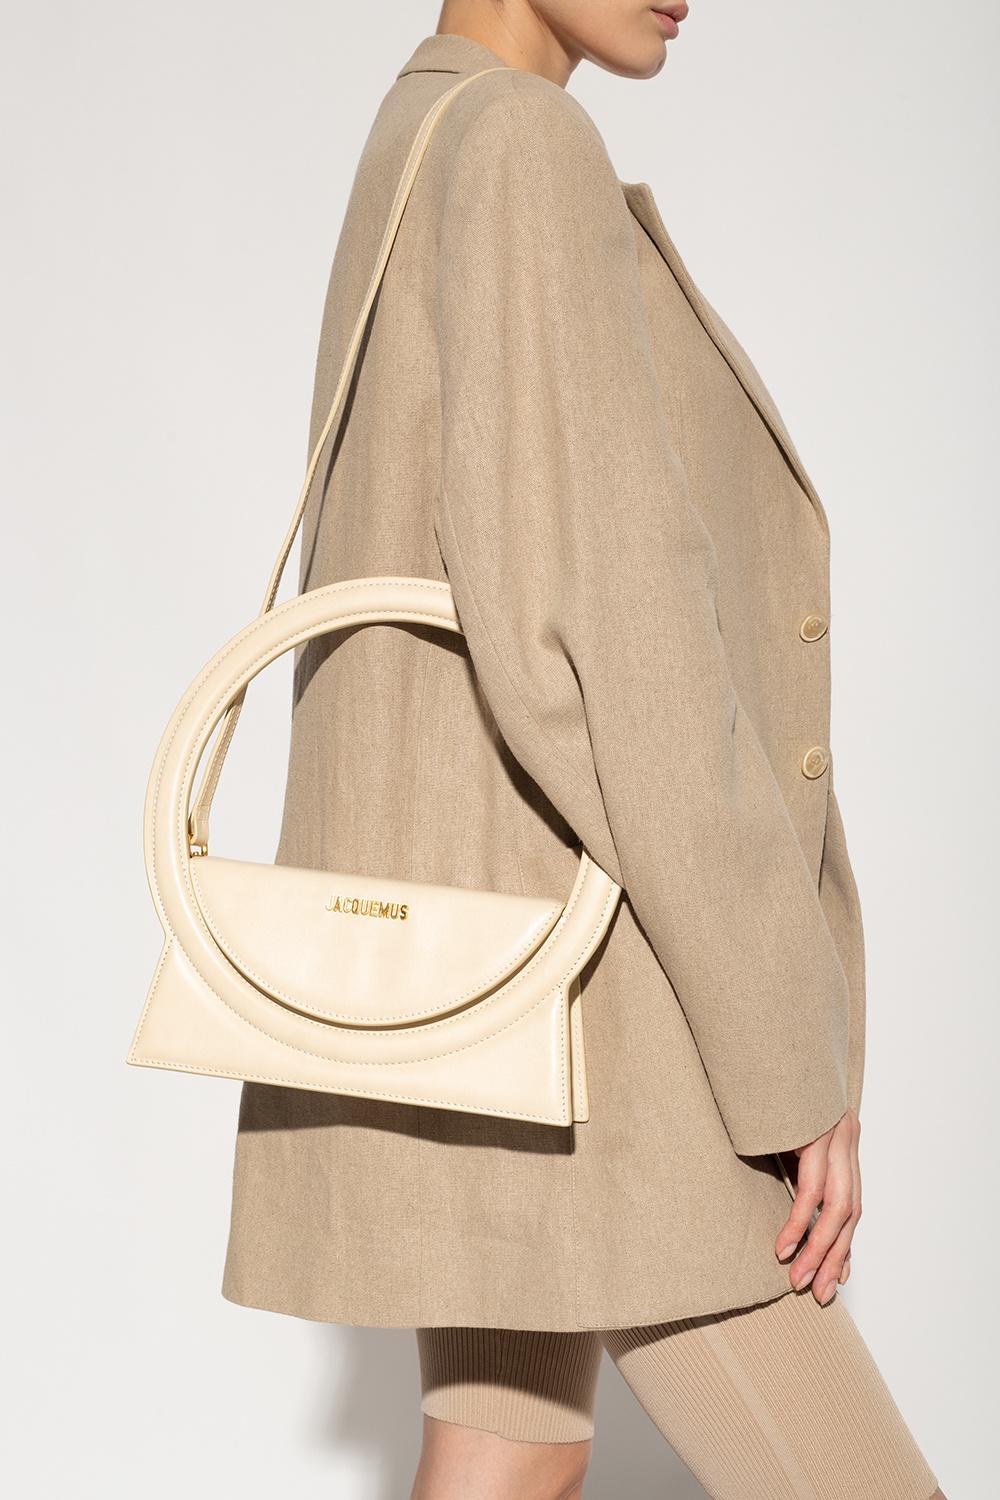 Jacquemus 'le Sac Rond' Shoulder Bag in Natural